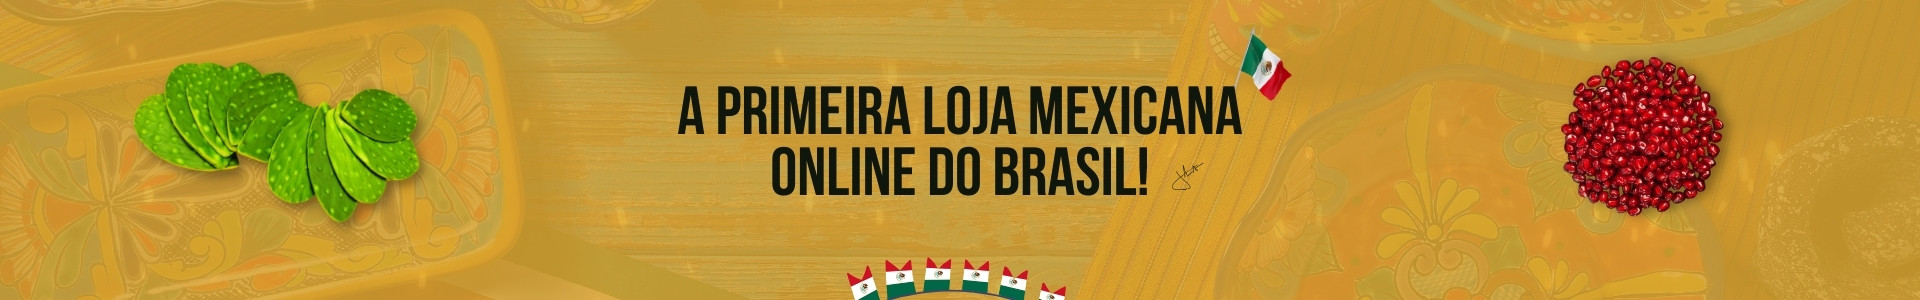 A Primeira Loja Mexicana Online no Brasil